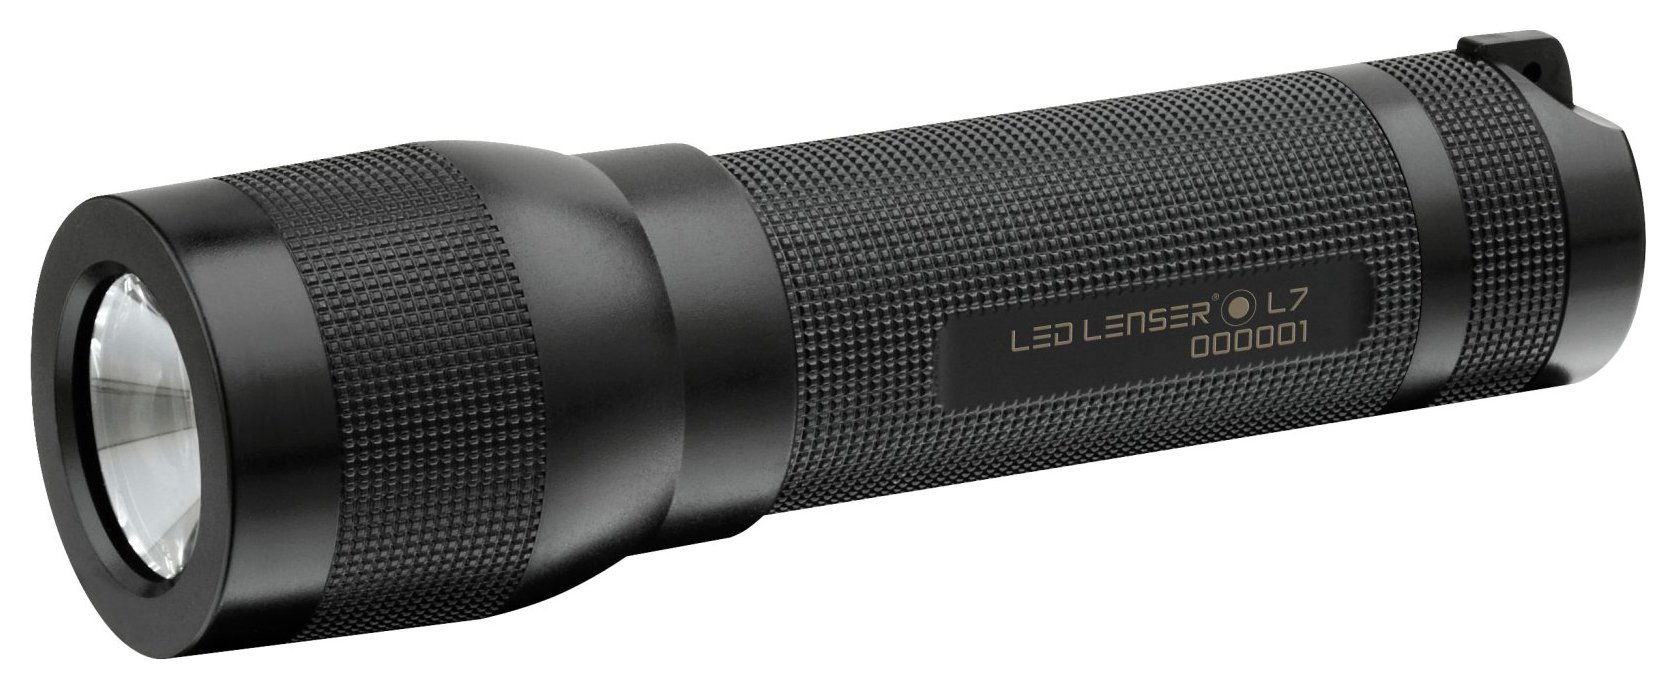 LED Lenser L7 Lightweight Torch. Review